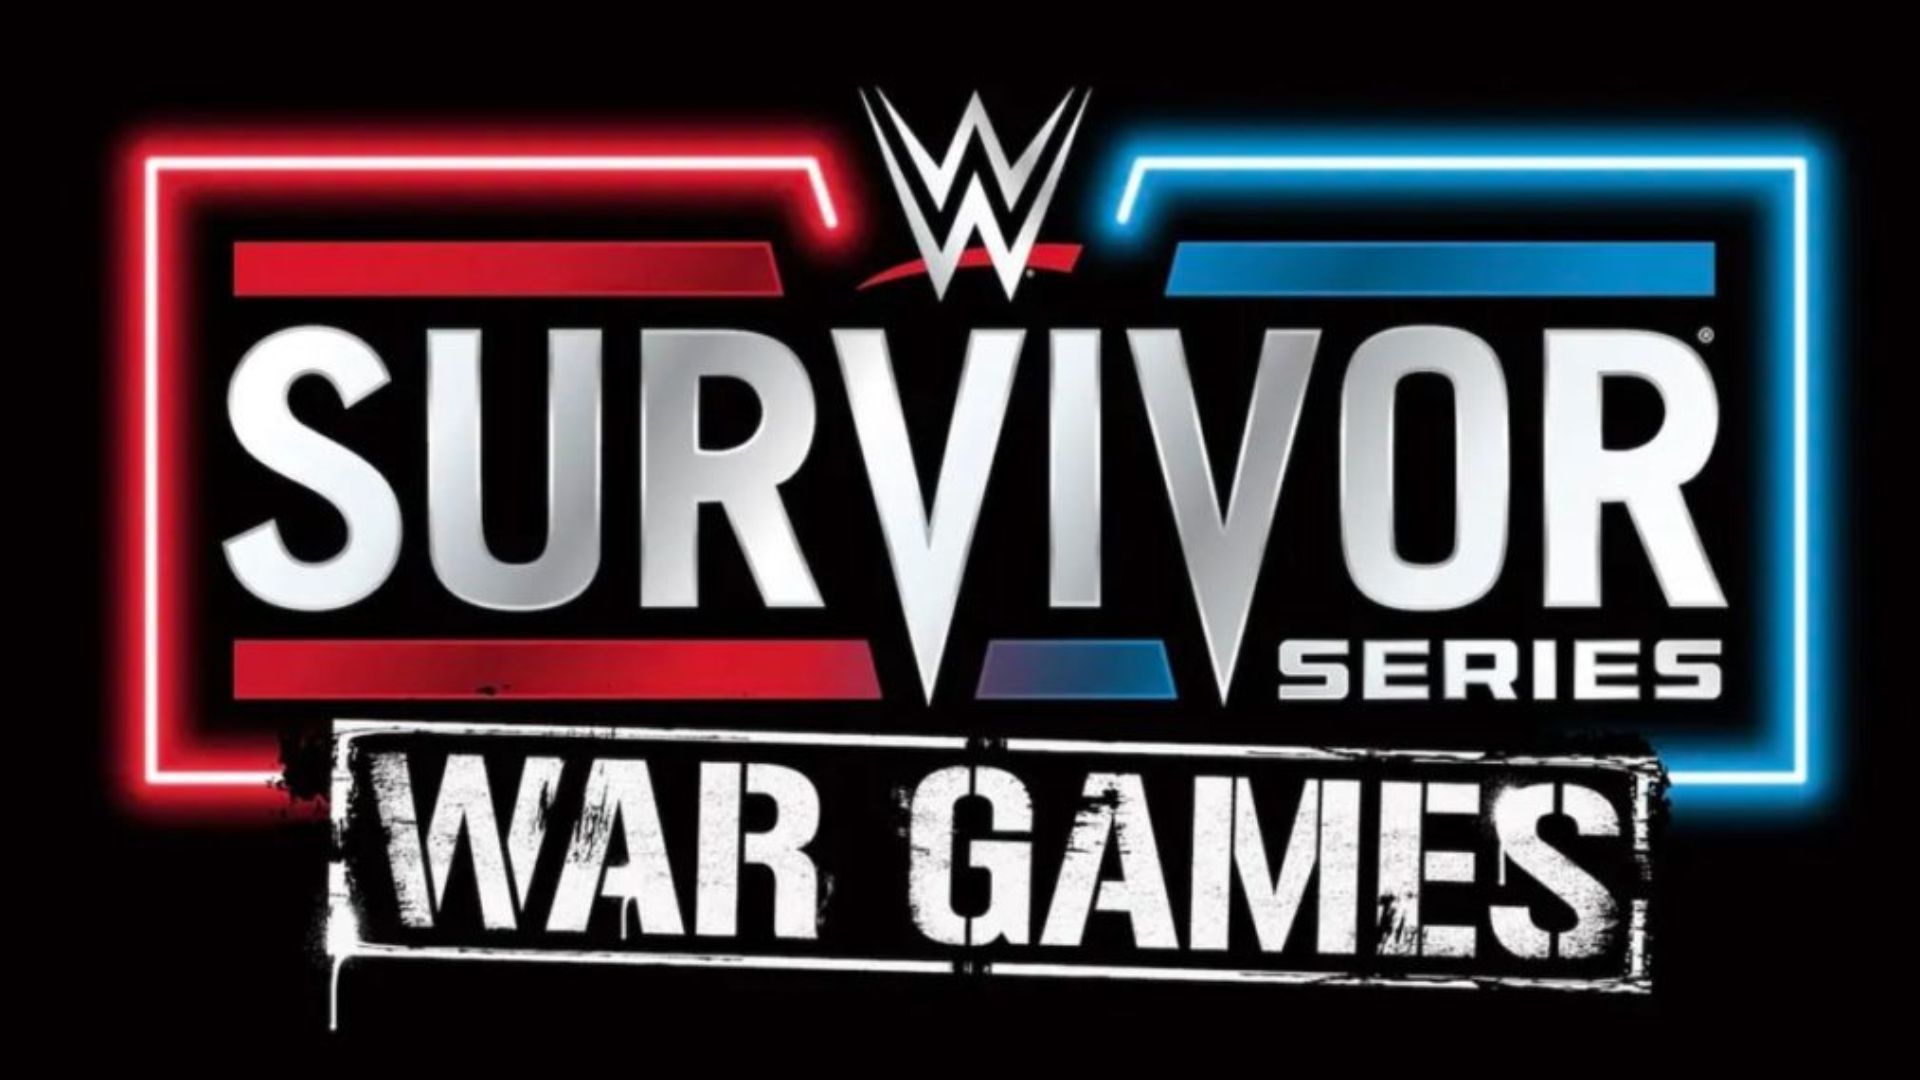 WWE Survivor Series: WarGames will be held at Boston, Massachusetts on November 26